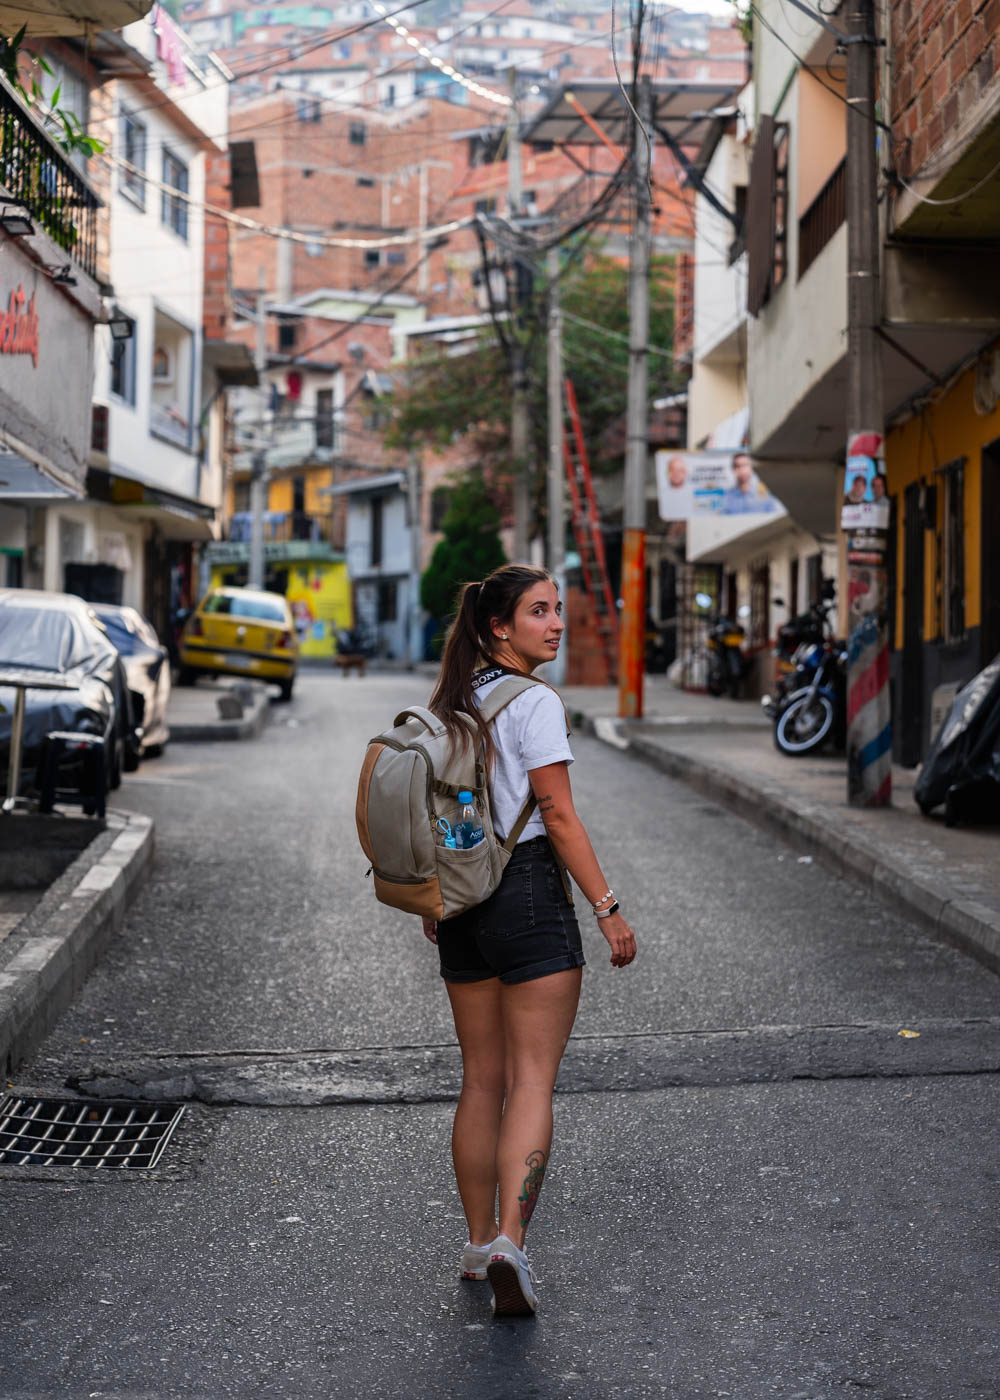 Sara wearing a backpack and walking along a road in Comuna 13.